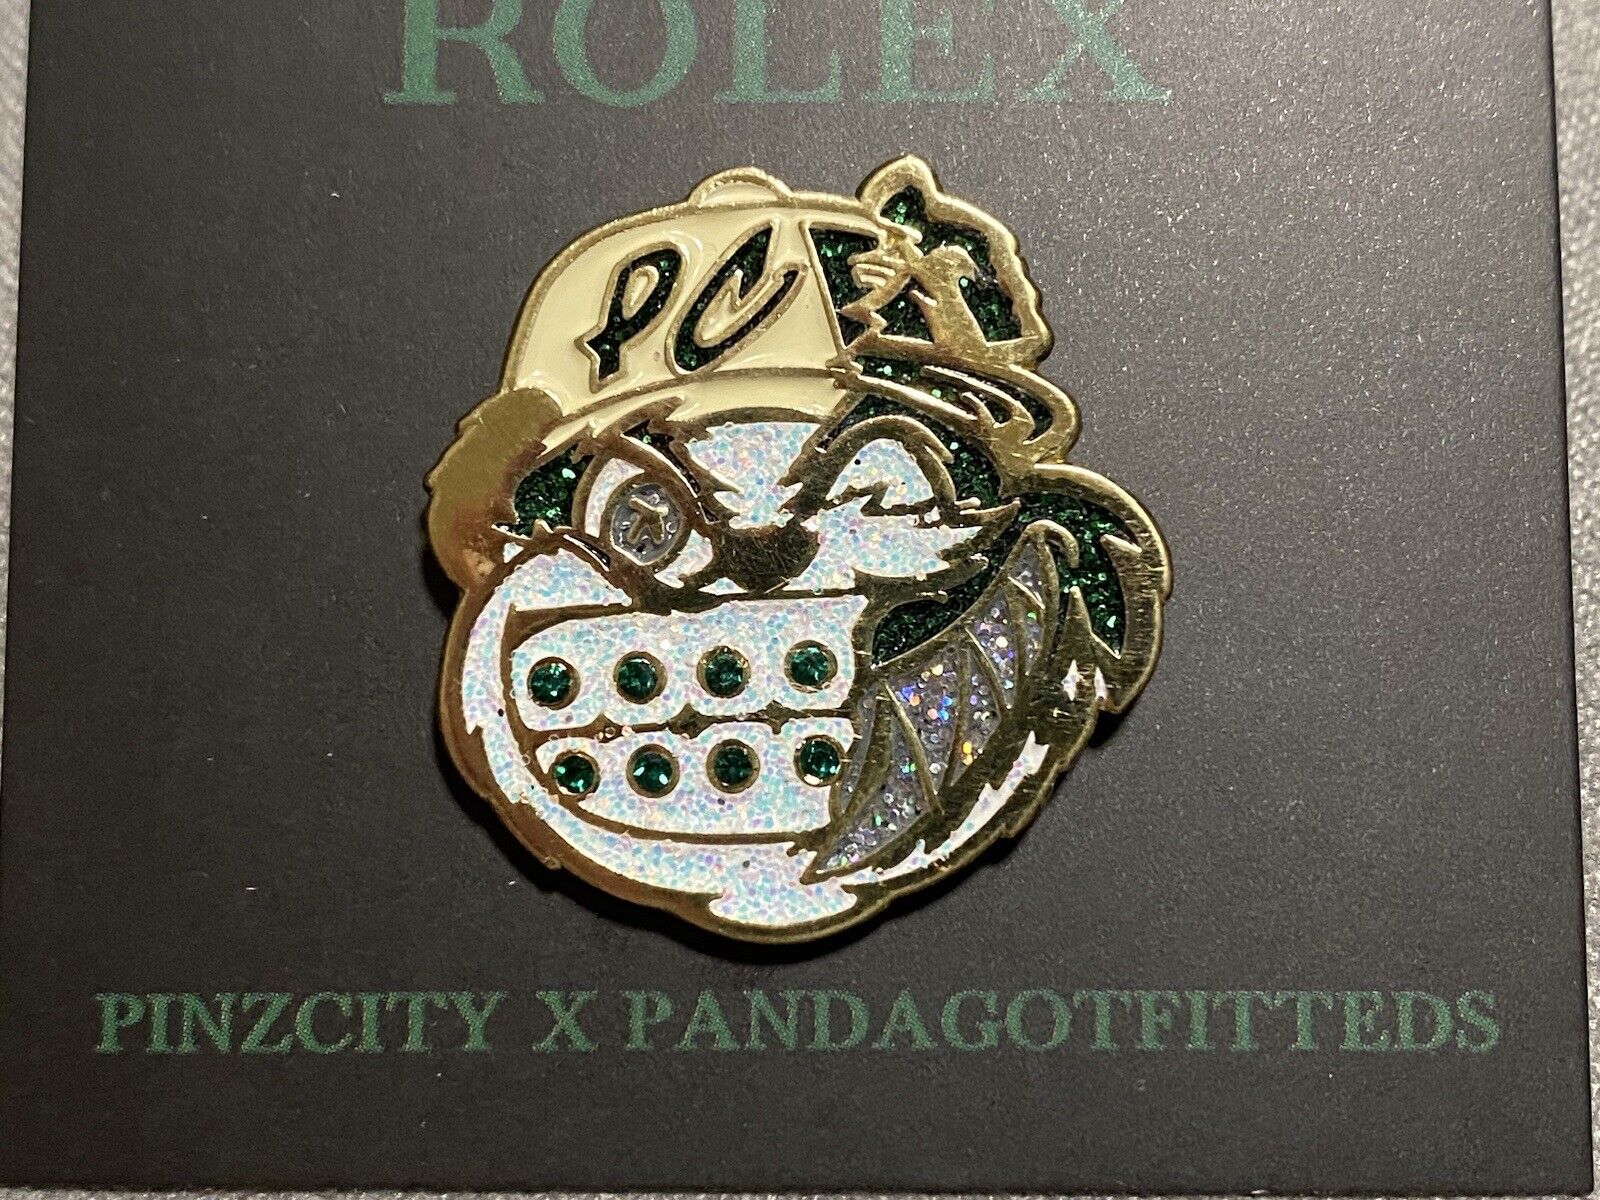 Pinzcity x Panda Got Fitteds Rolex Green Gold White scare bear hat pin